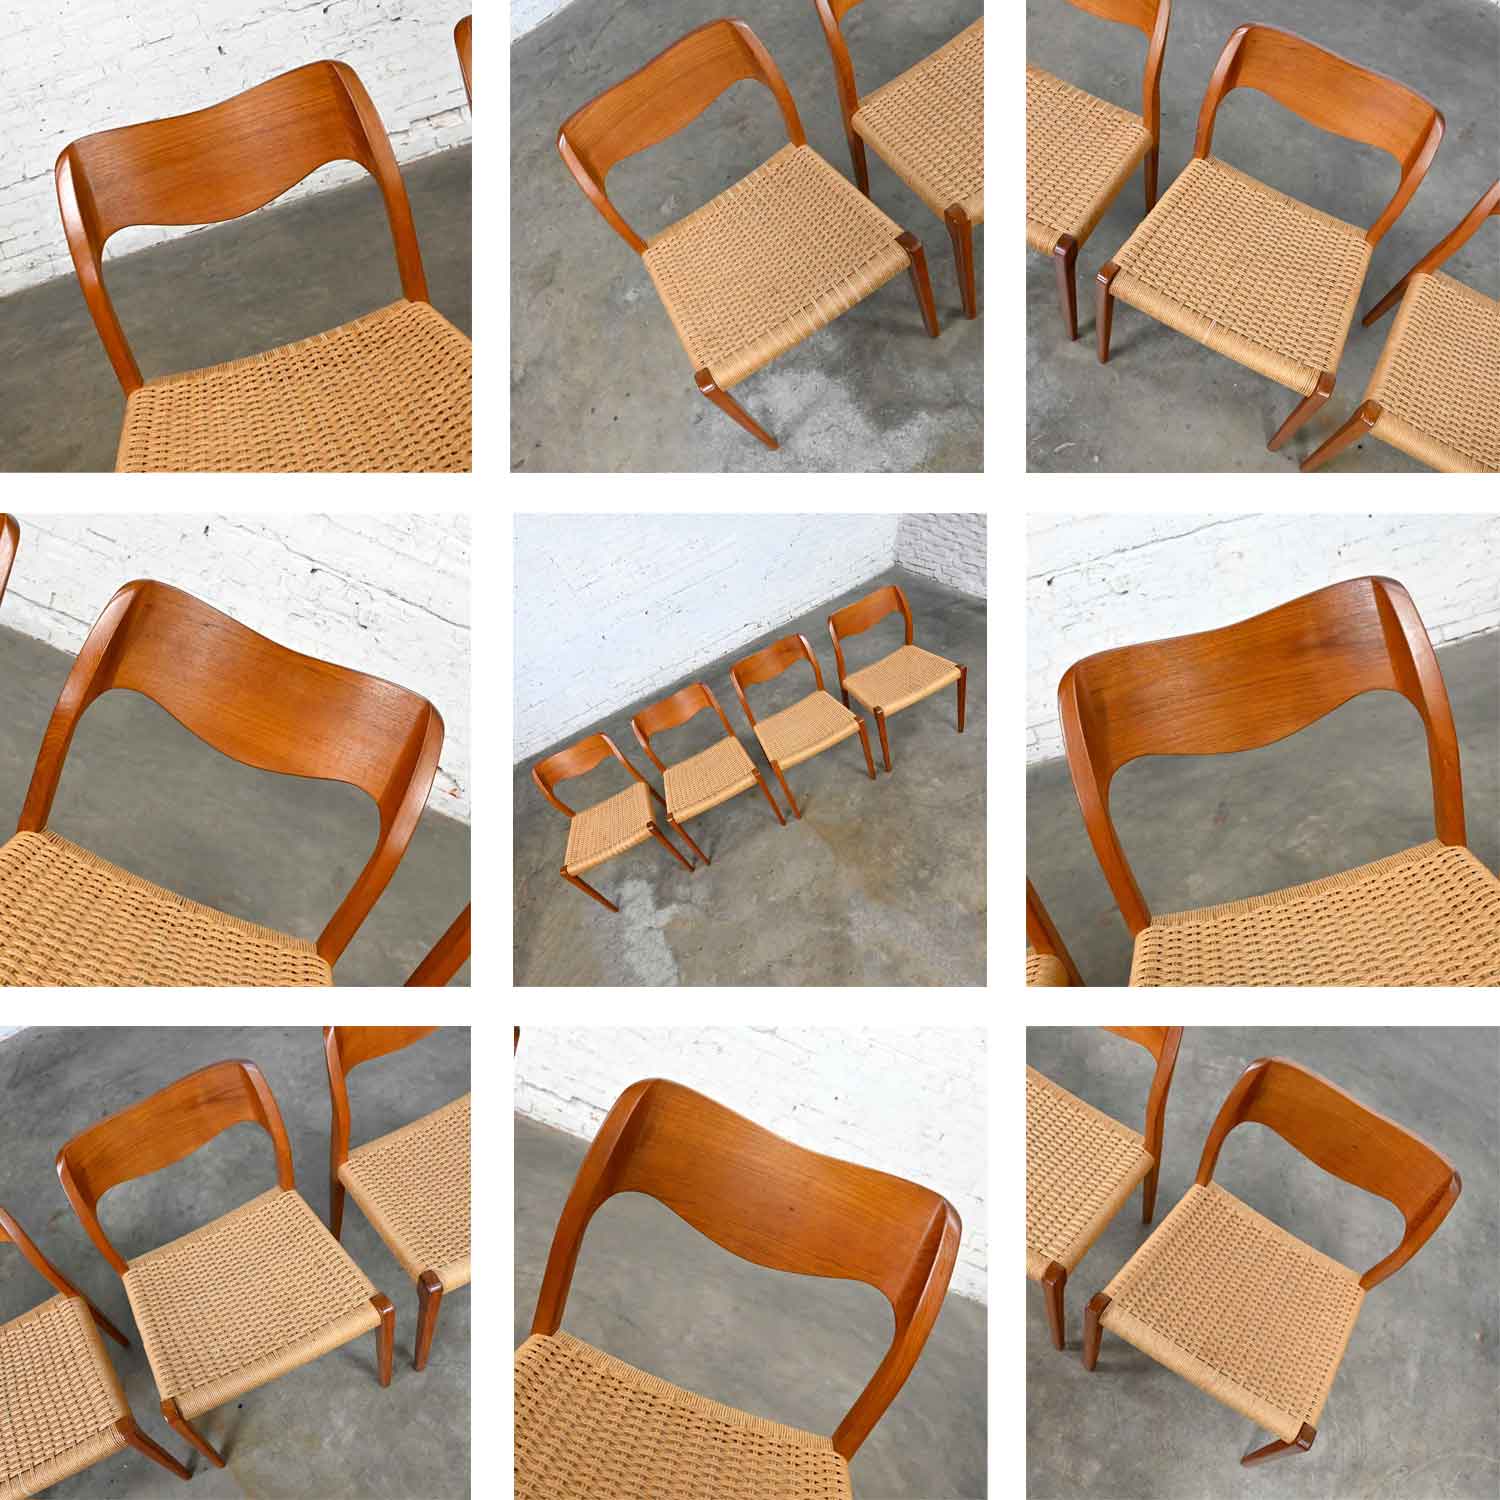 Neils O Moller Scandinavian Modern Model 71 Teak Dining Chairs by J.L. Mollers Mobelfabrik Set of 4